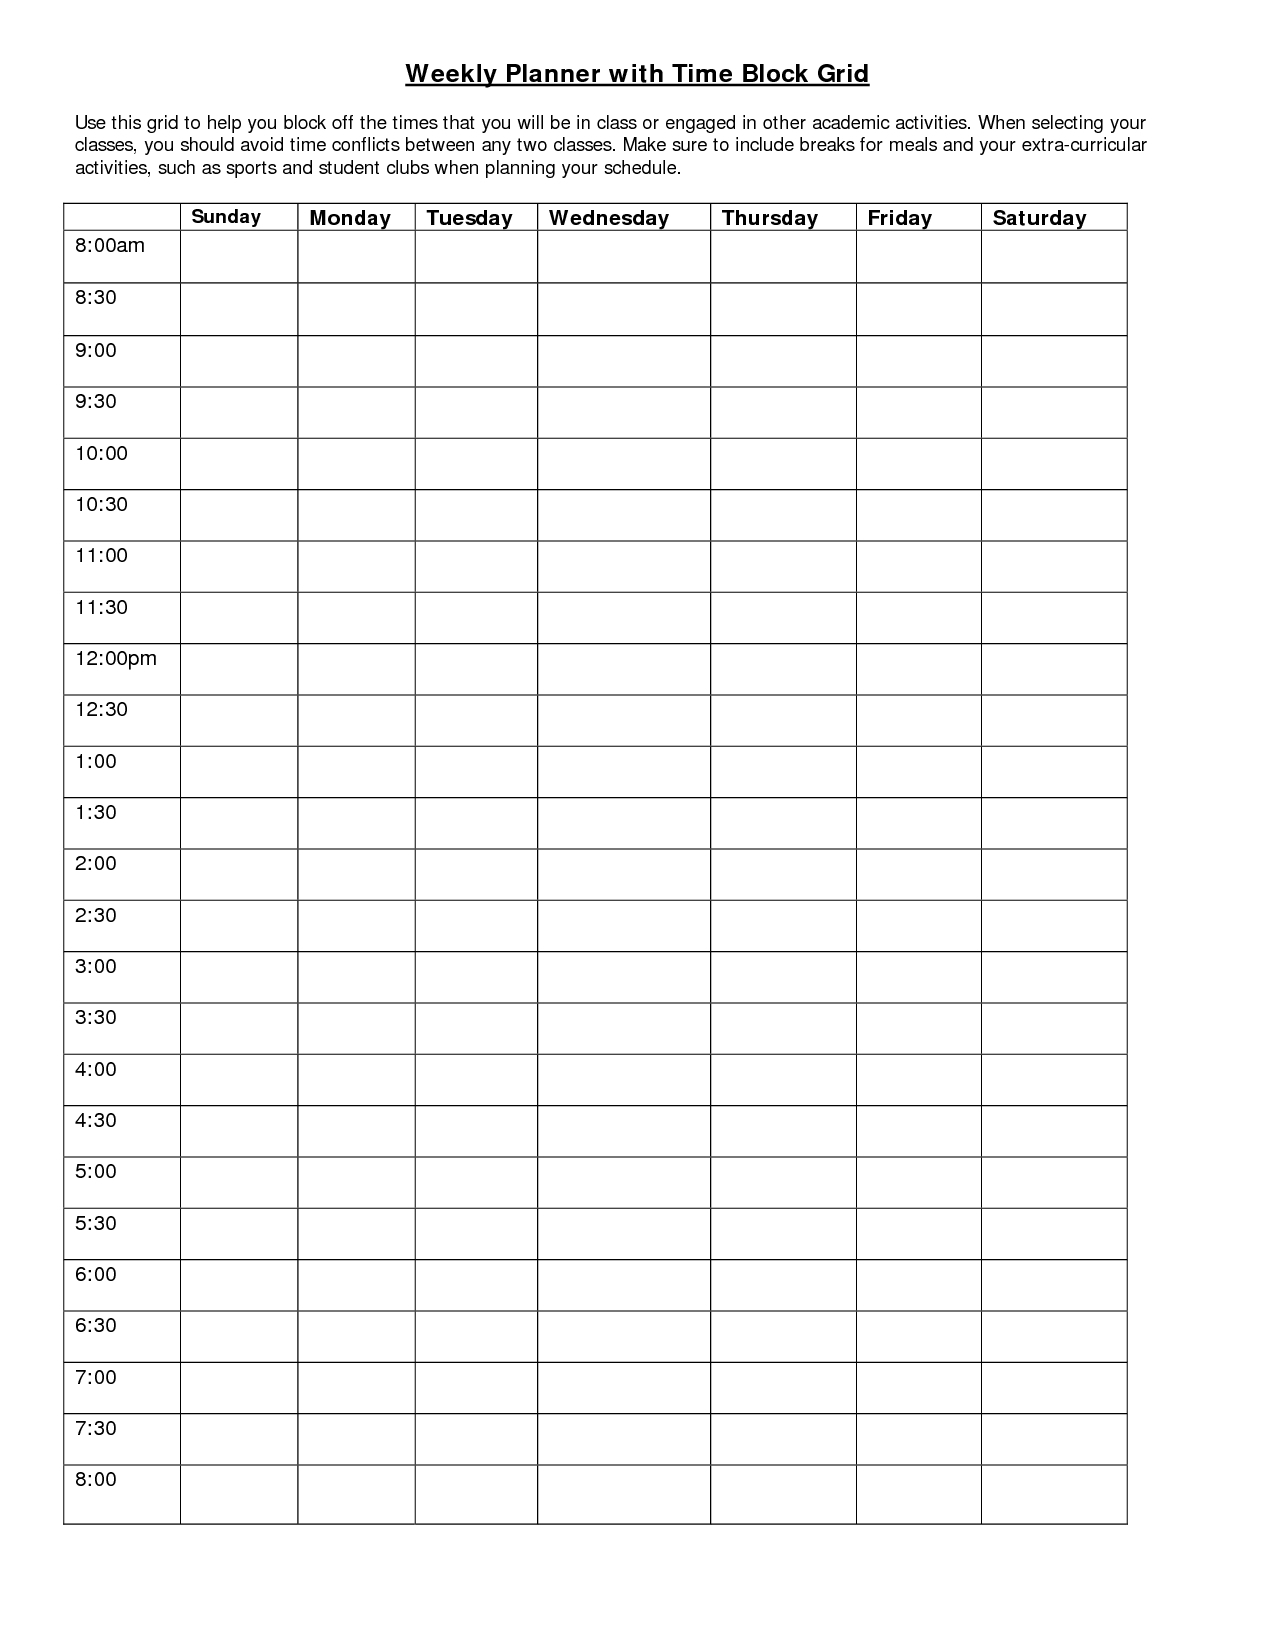 Weekly Calendar Time Slots Printable | Printable Calendar pertaining to Weekly Planner With Time Slots Printable